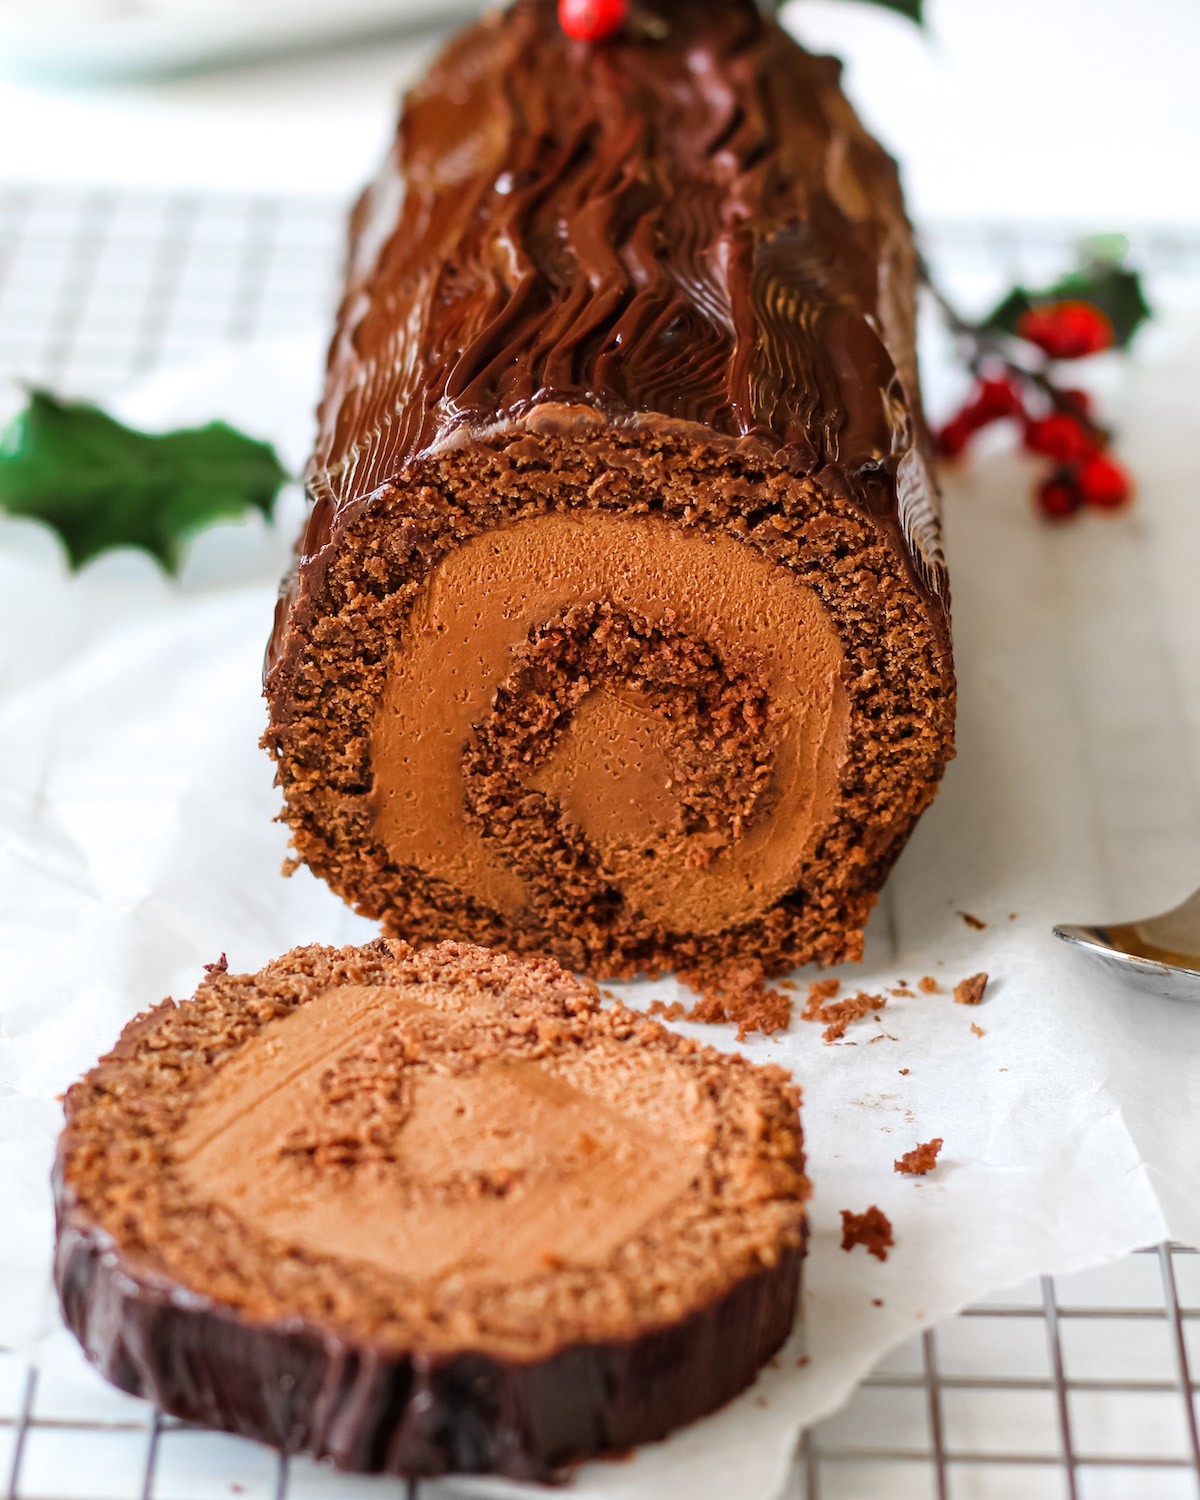 Chocolate Yule Log Recipe: How to Make It